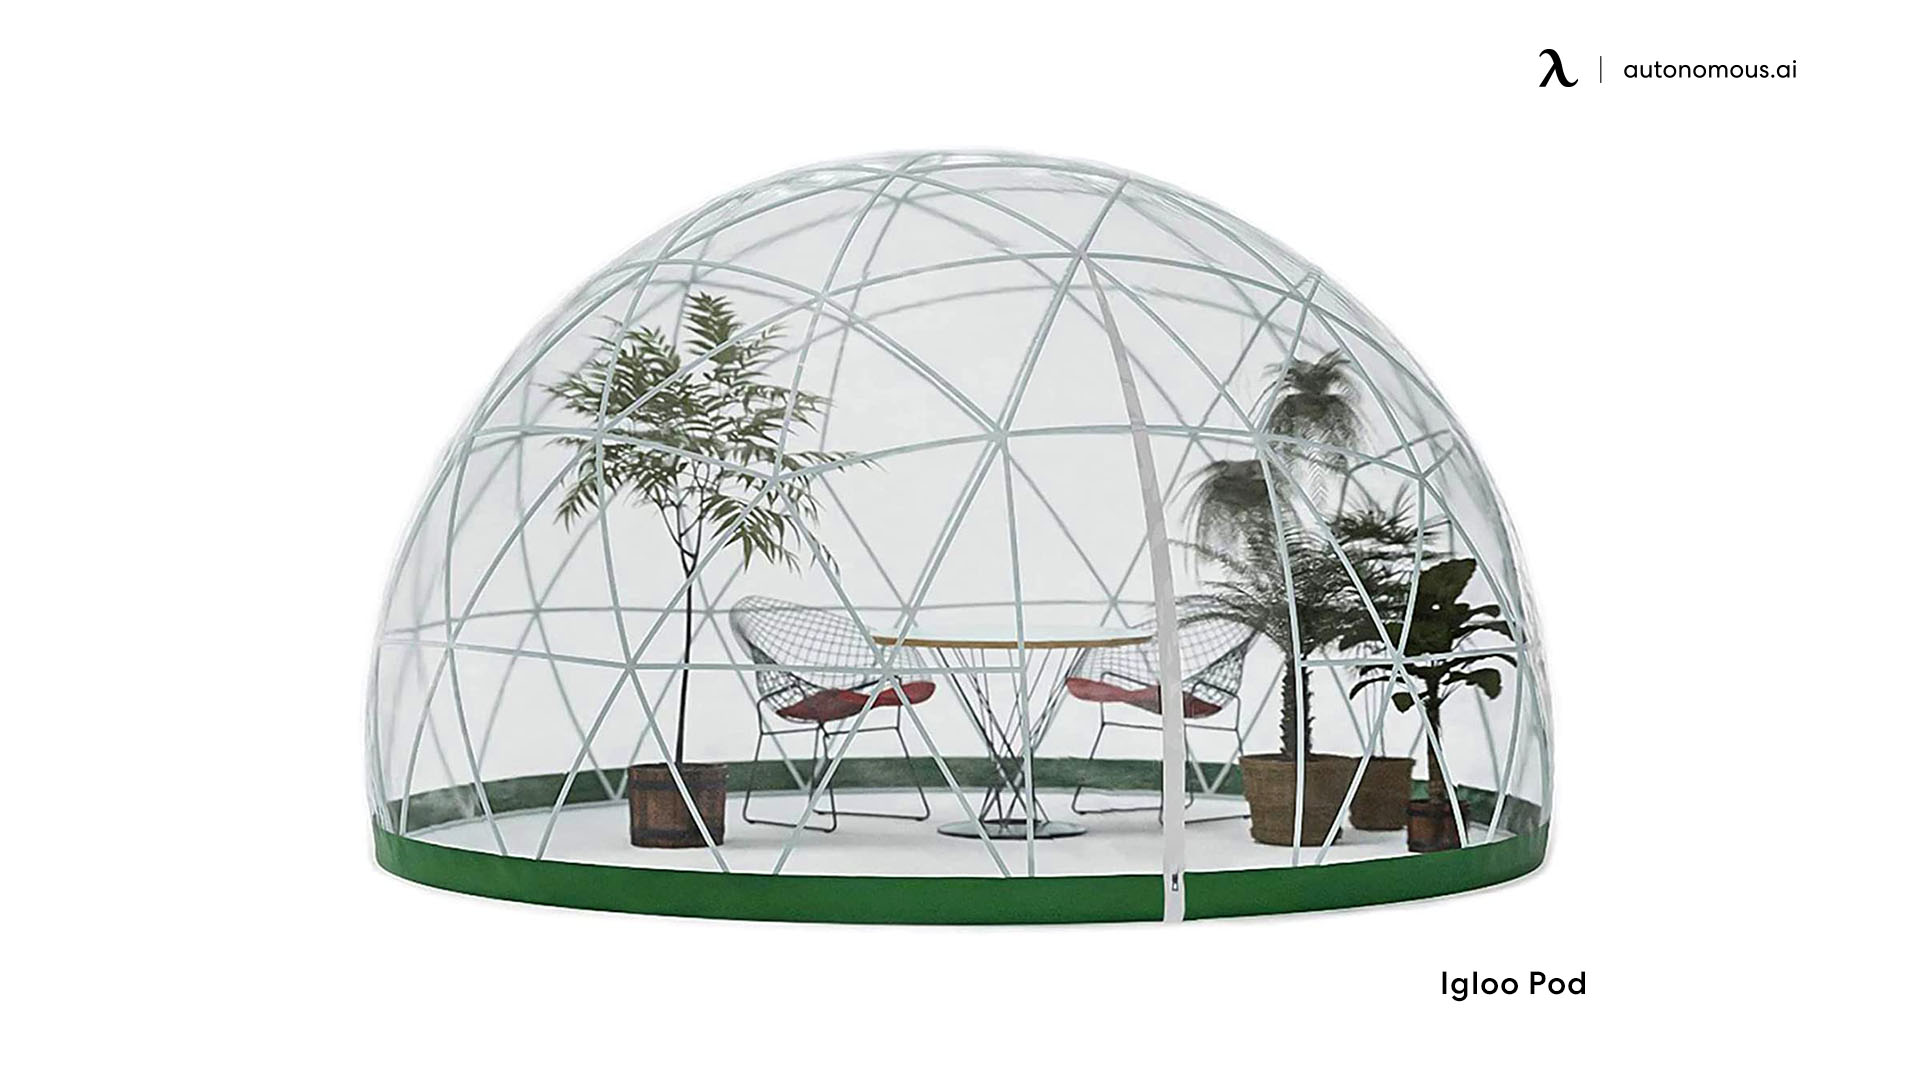 Igloo garden office pod in california